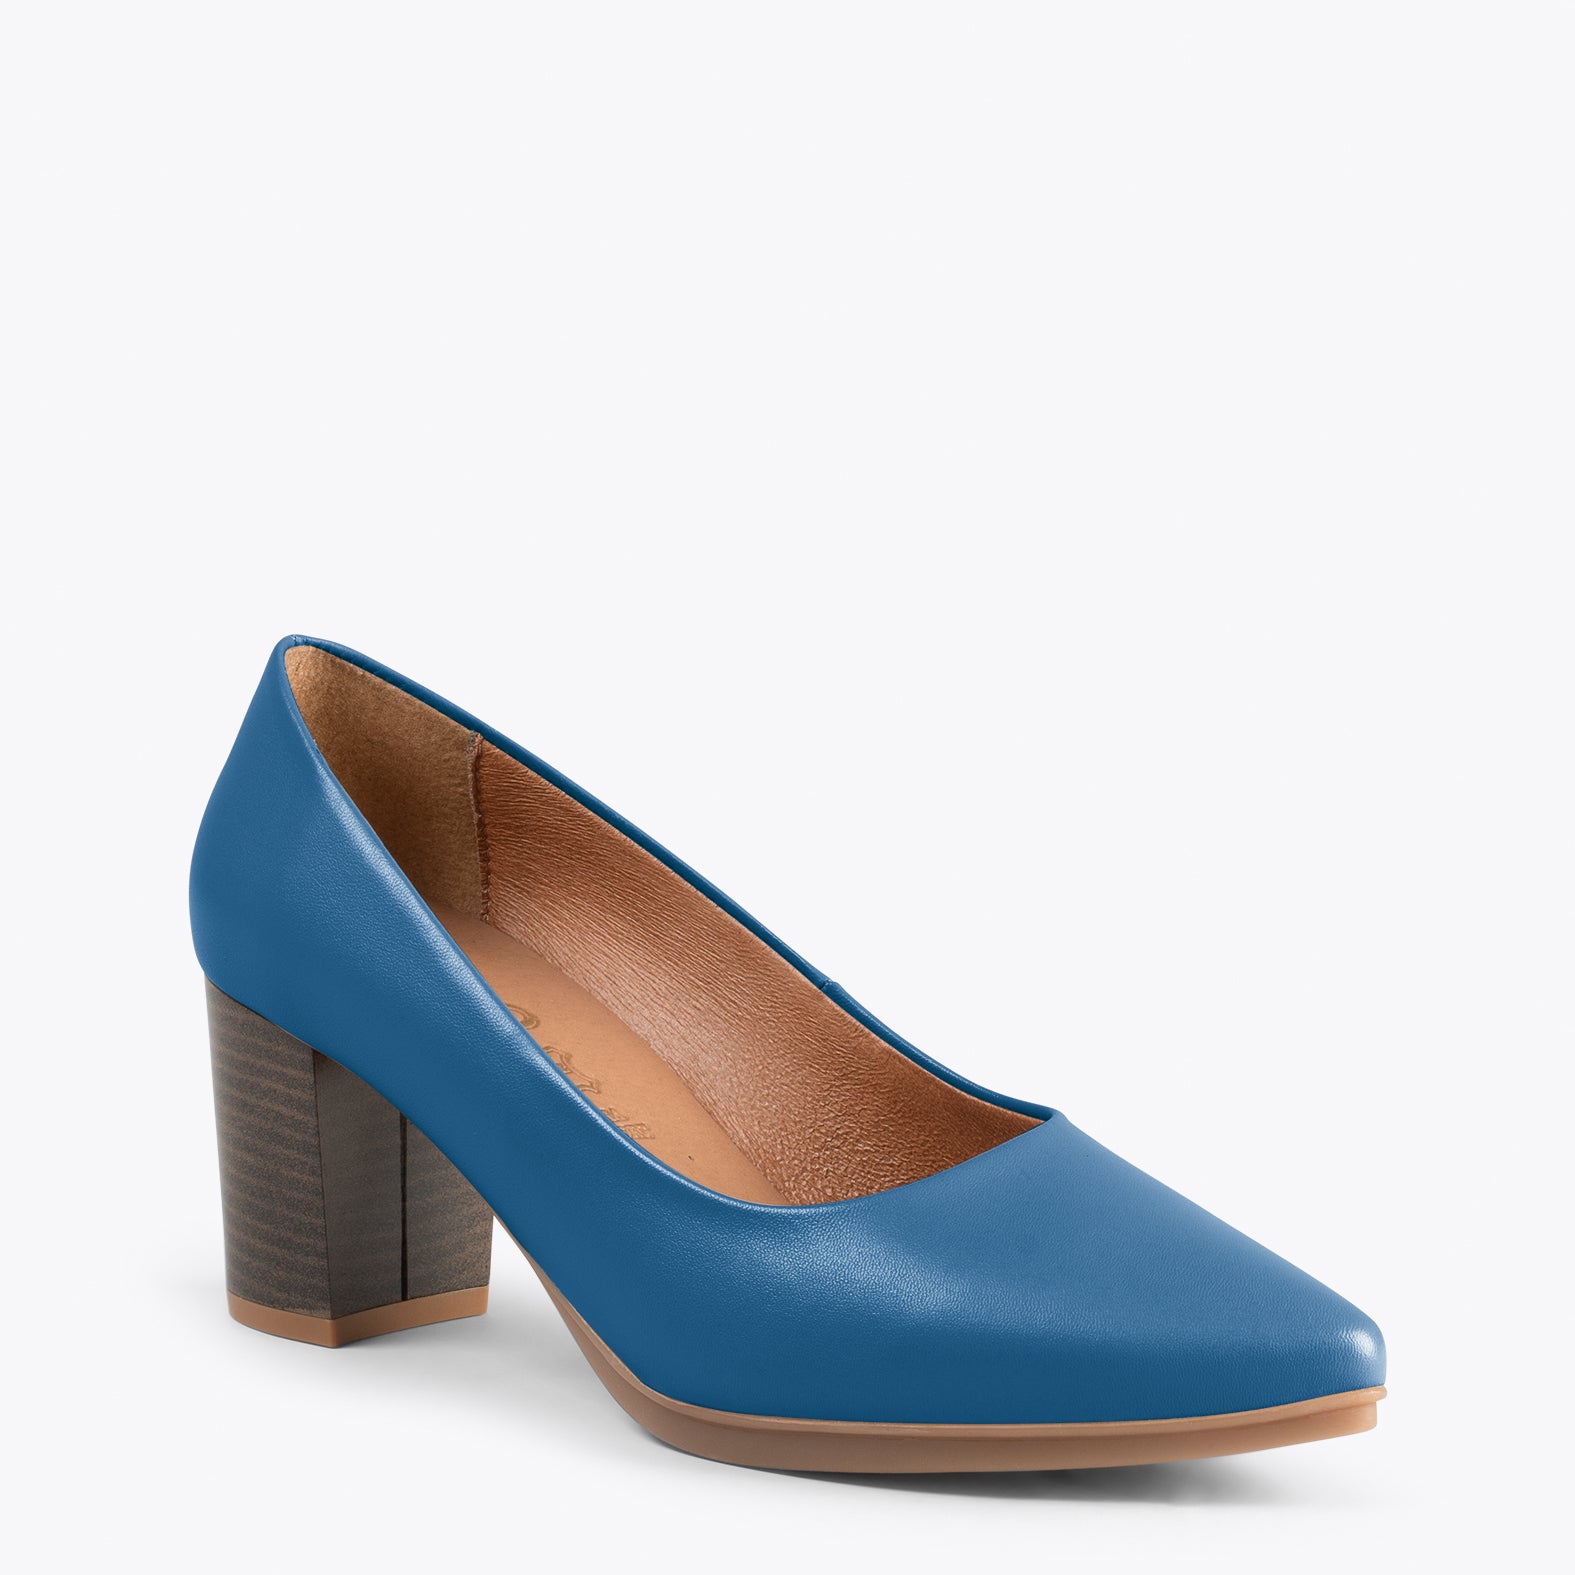 URBAN S SALON – BLUE nappa leather mid heels